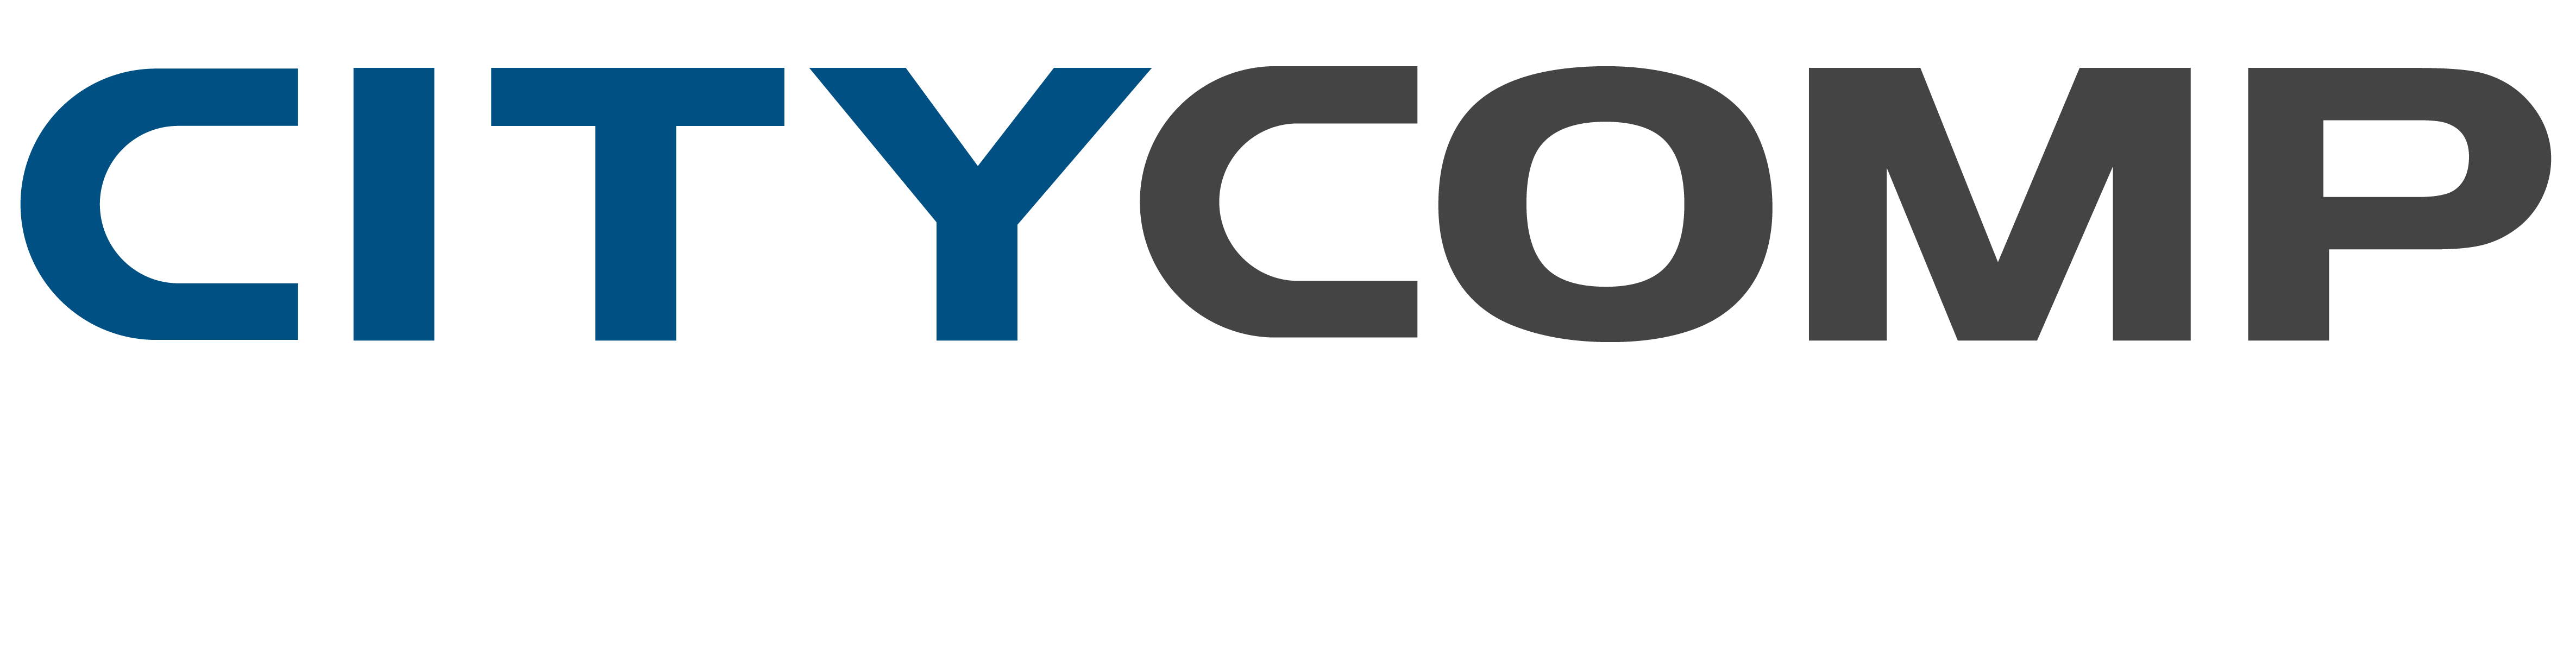 Citycomp Service - Multi Vendor Services, IT Services, Hardware Wartung